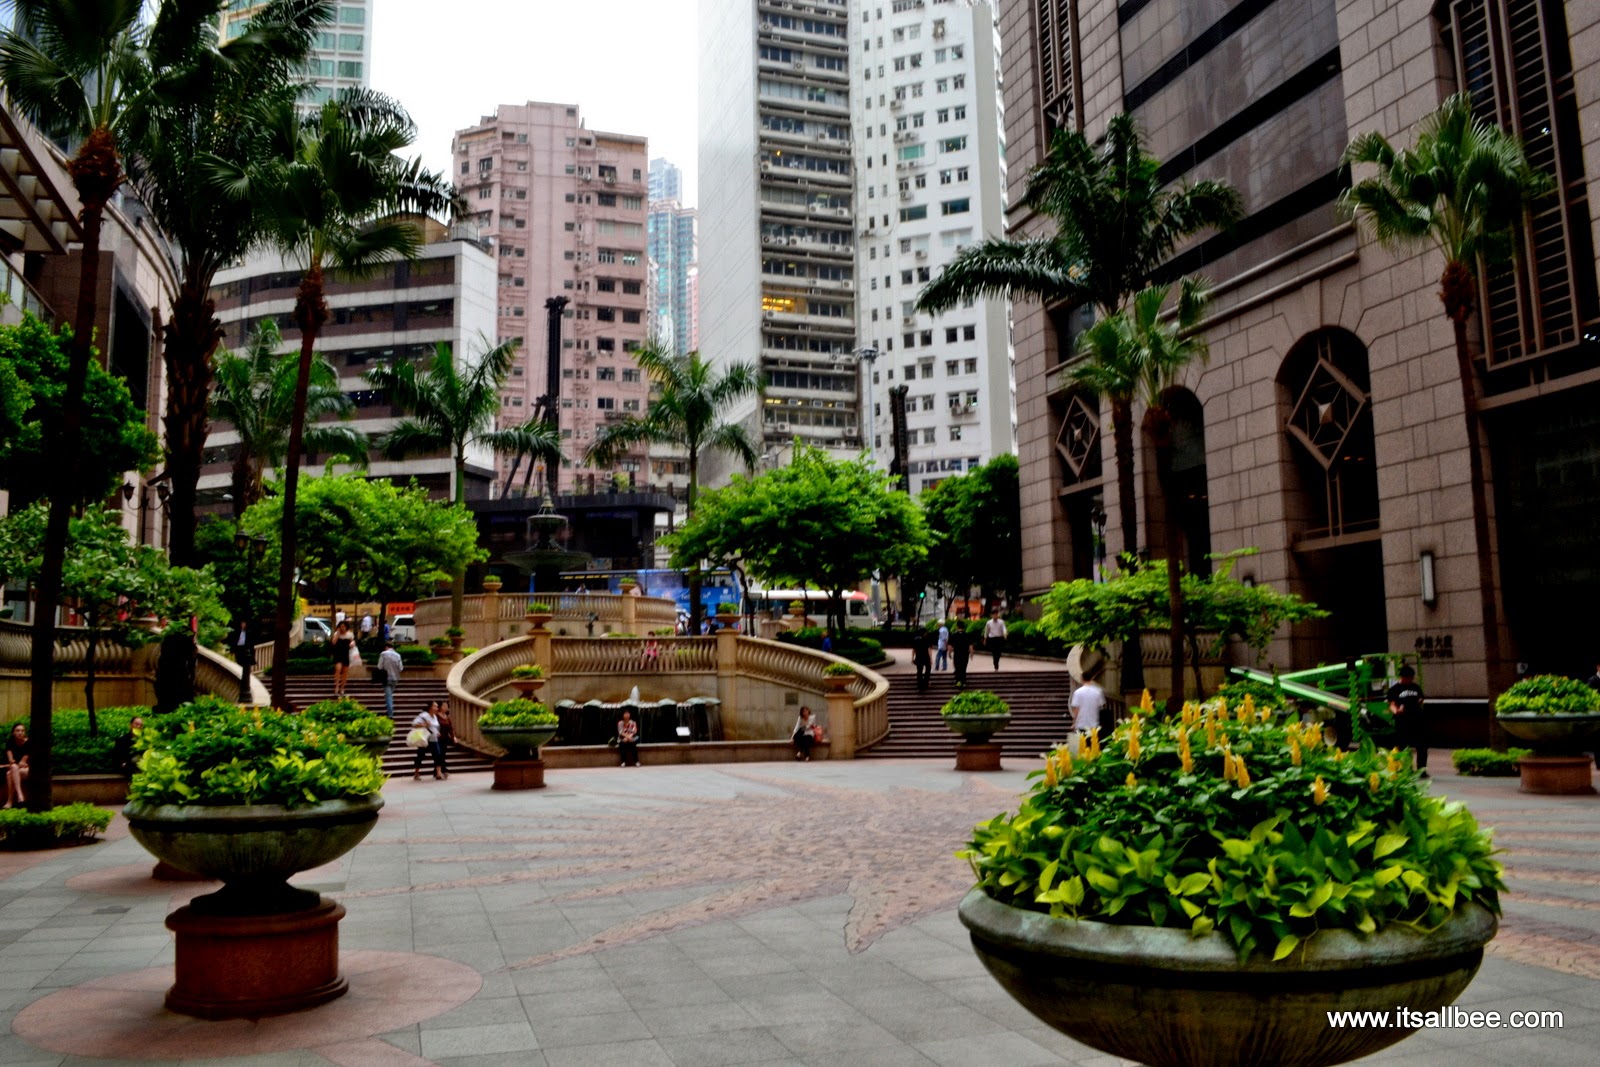 Hong Kong: Lunch Date at Ritz Carlton